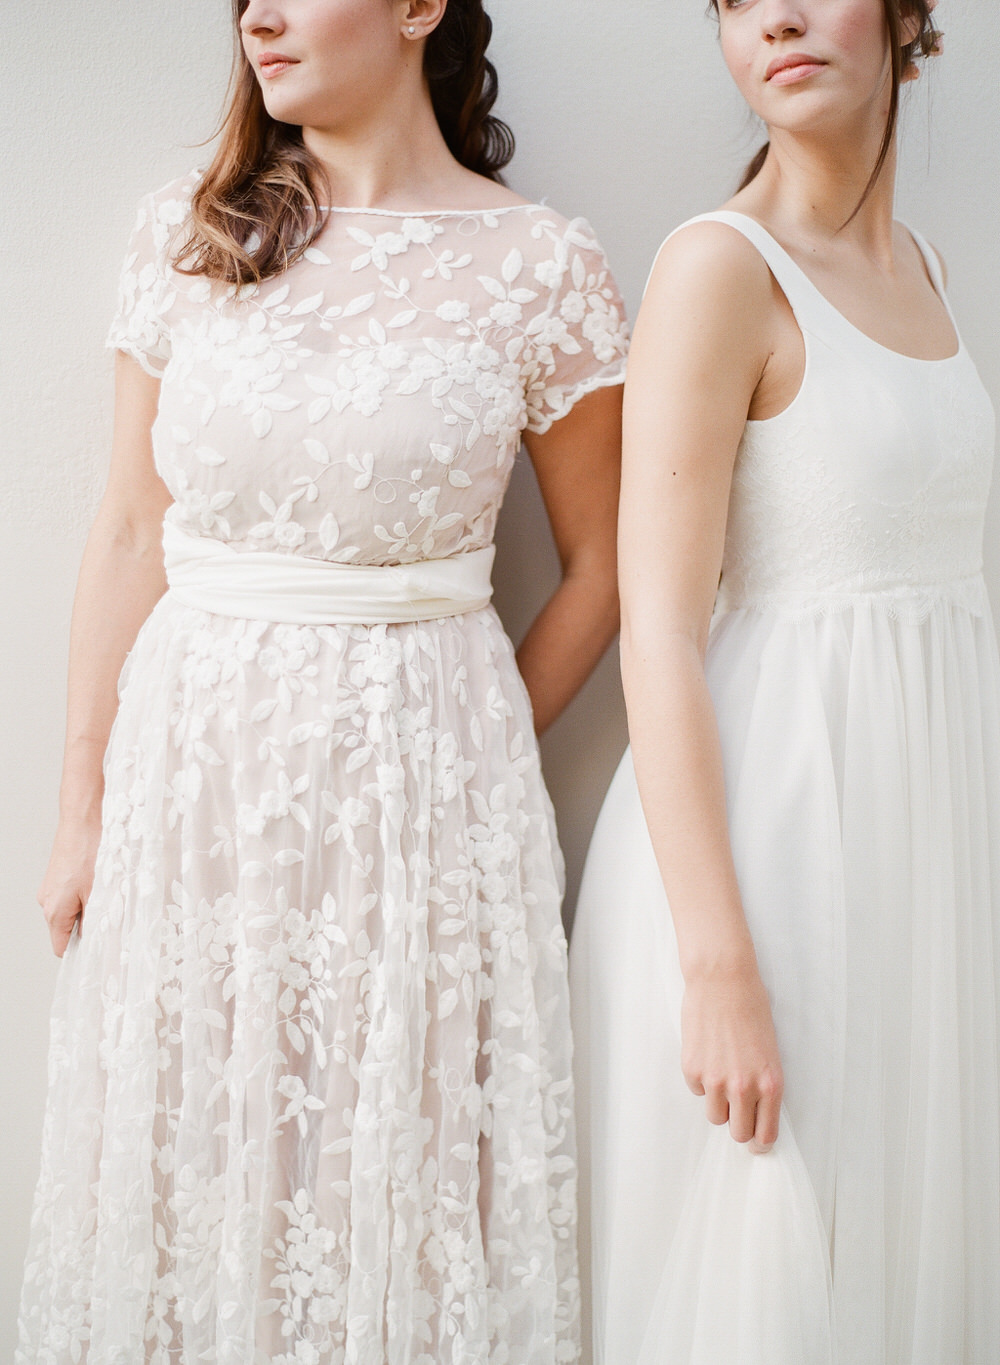 Wedding dress inspiration, short sleeve lace gown | Madame Shou Shou | Greek wedding photographers Les Anagnou